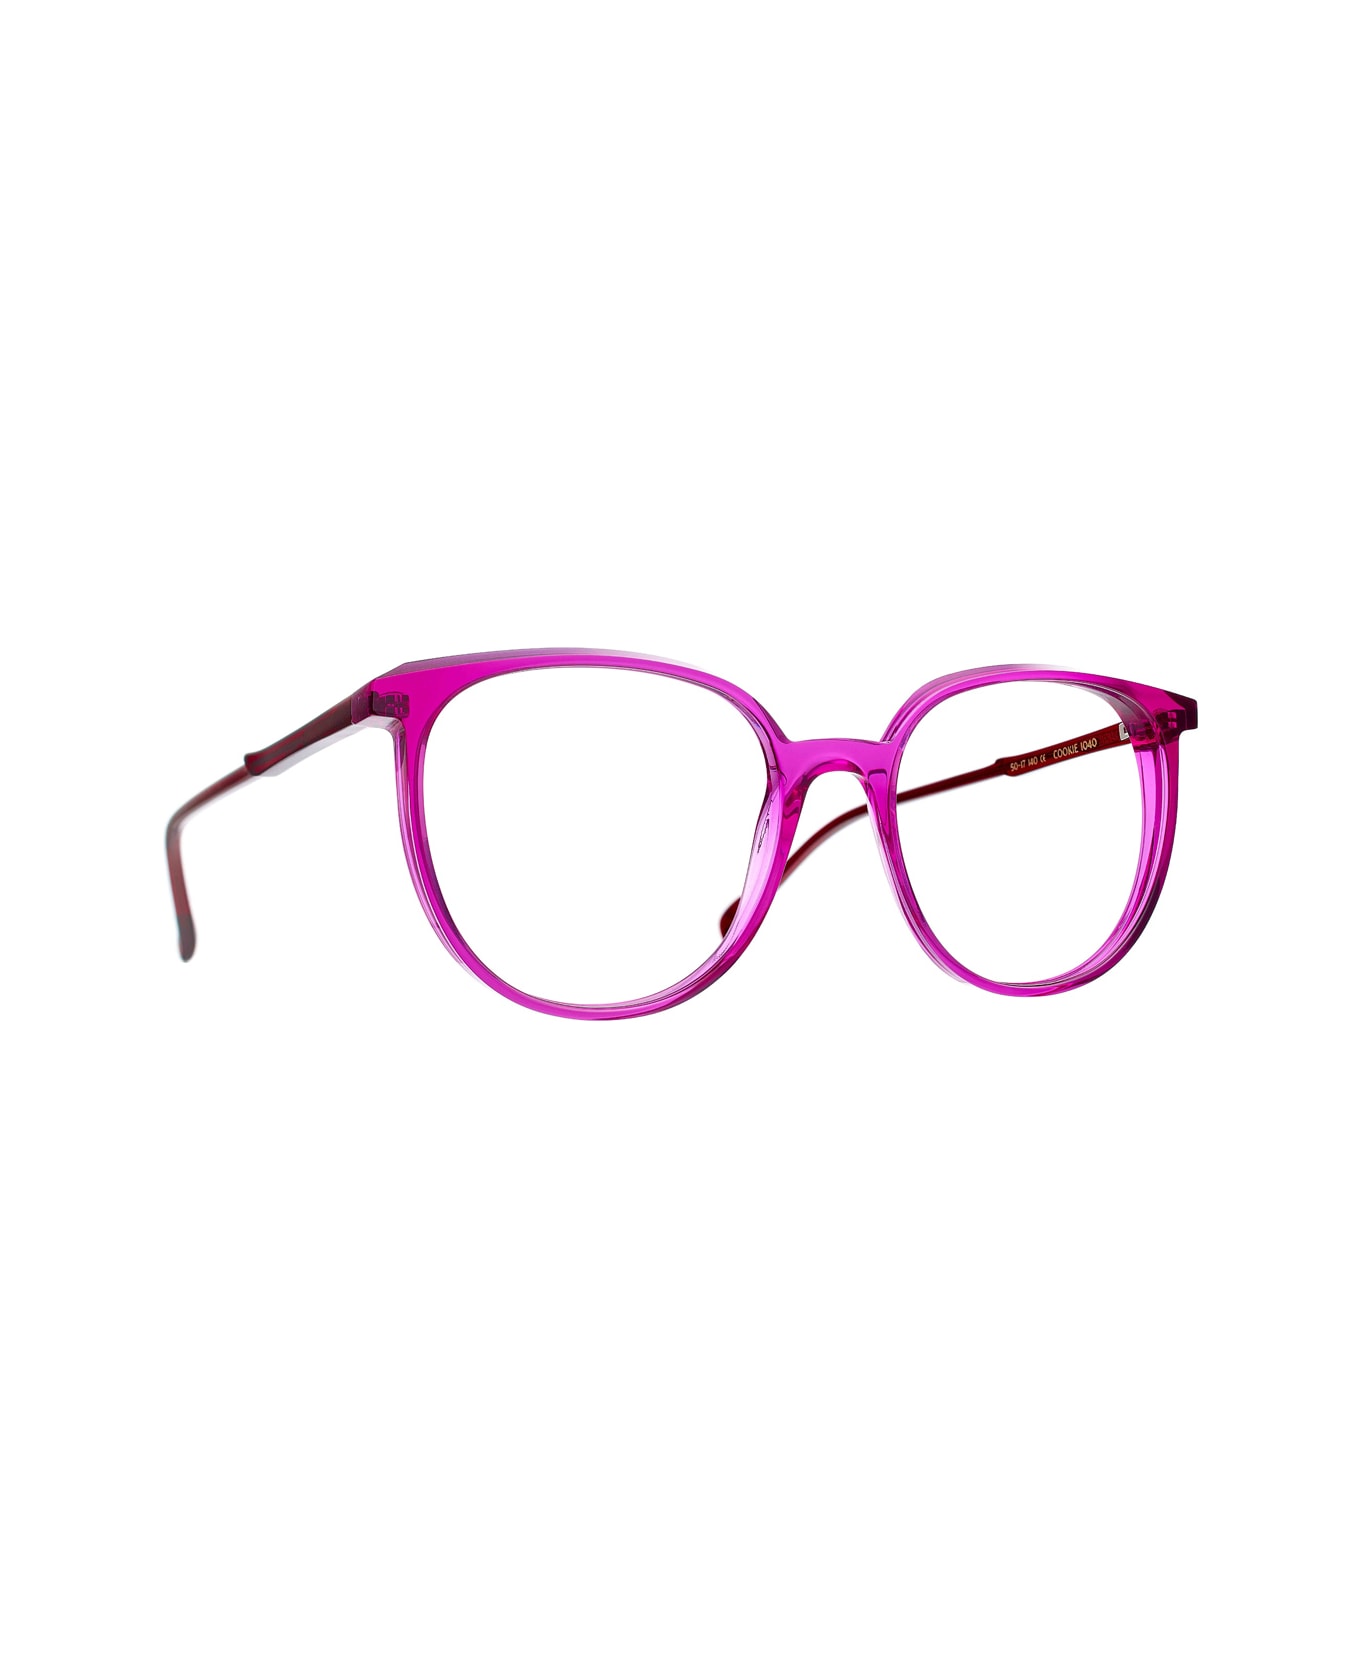 Blush Cookie 1040 Glasses - Viola